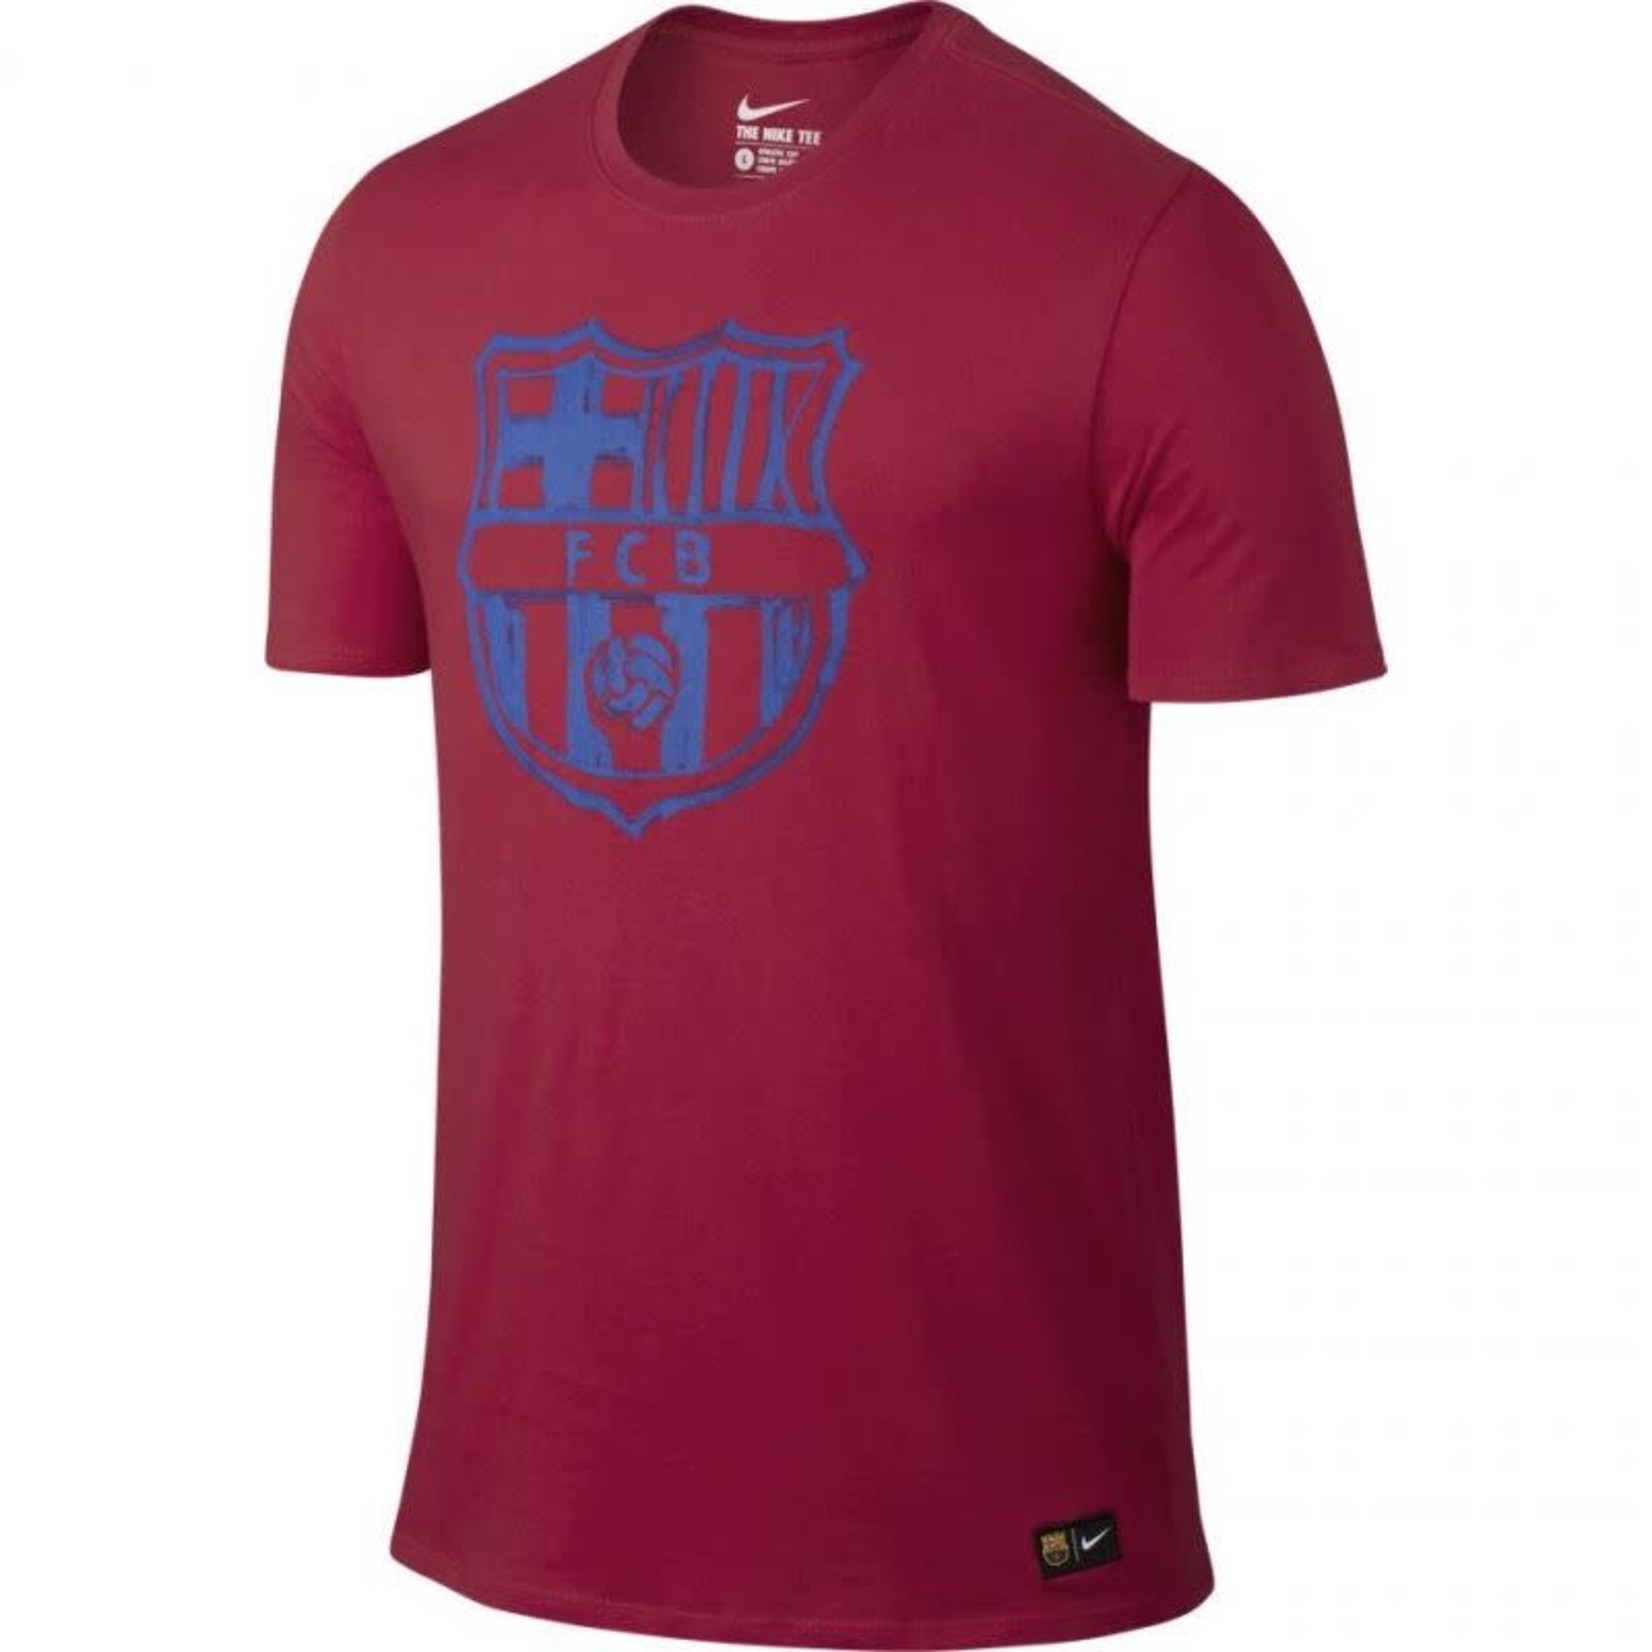 Nike Barcelona T-Shirt - Red/Blue